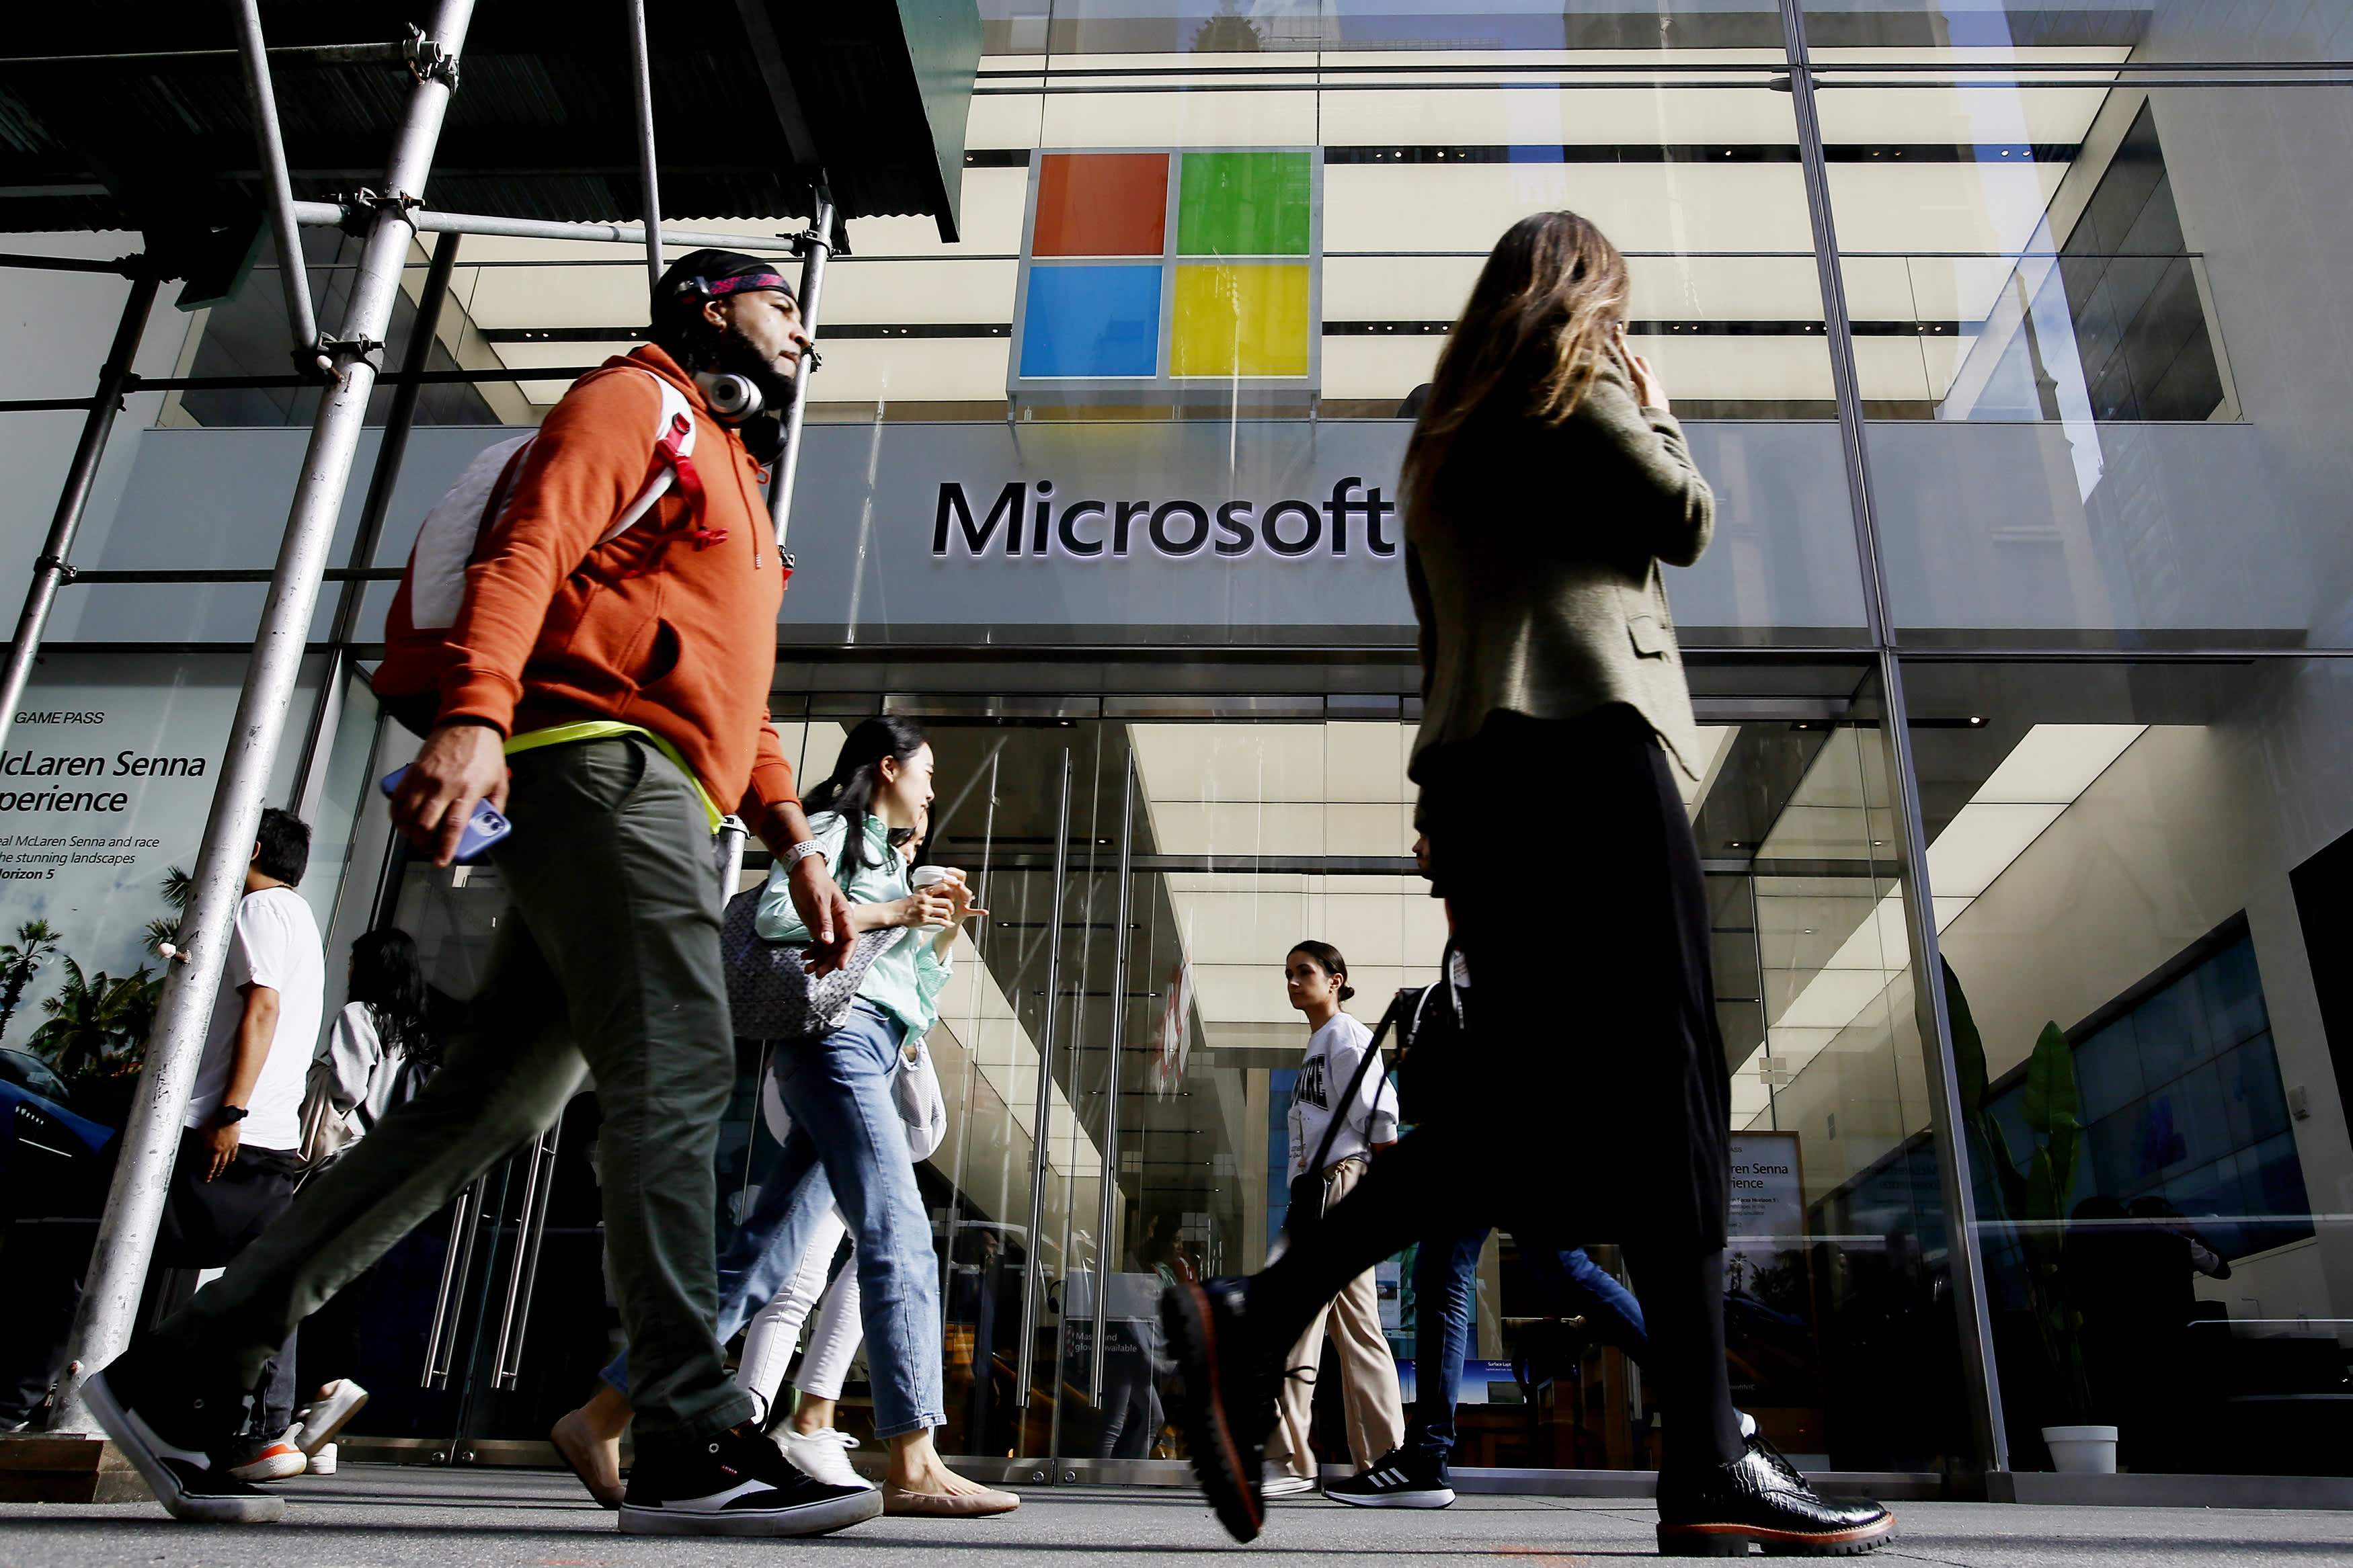 Guggenheim downgrades Microsoft, says vulnerabilities may be exacerbated during an economic slowdown